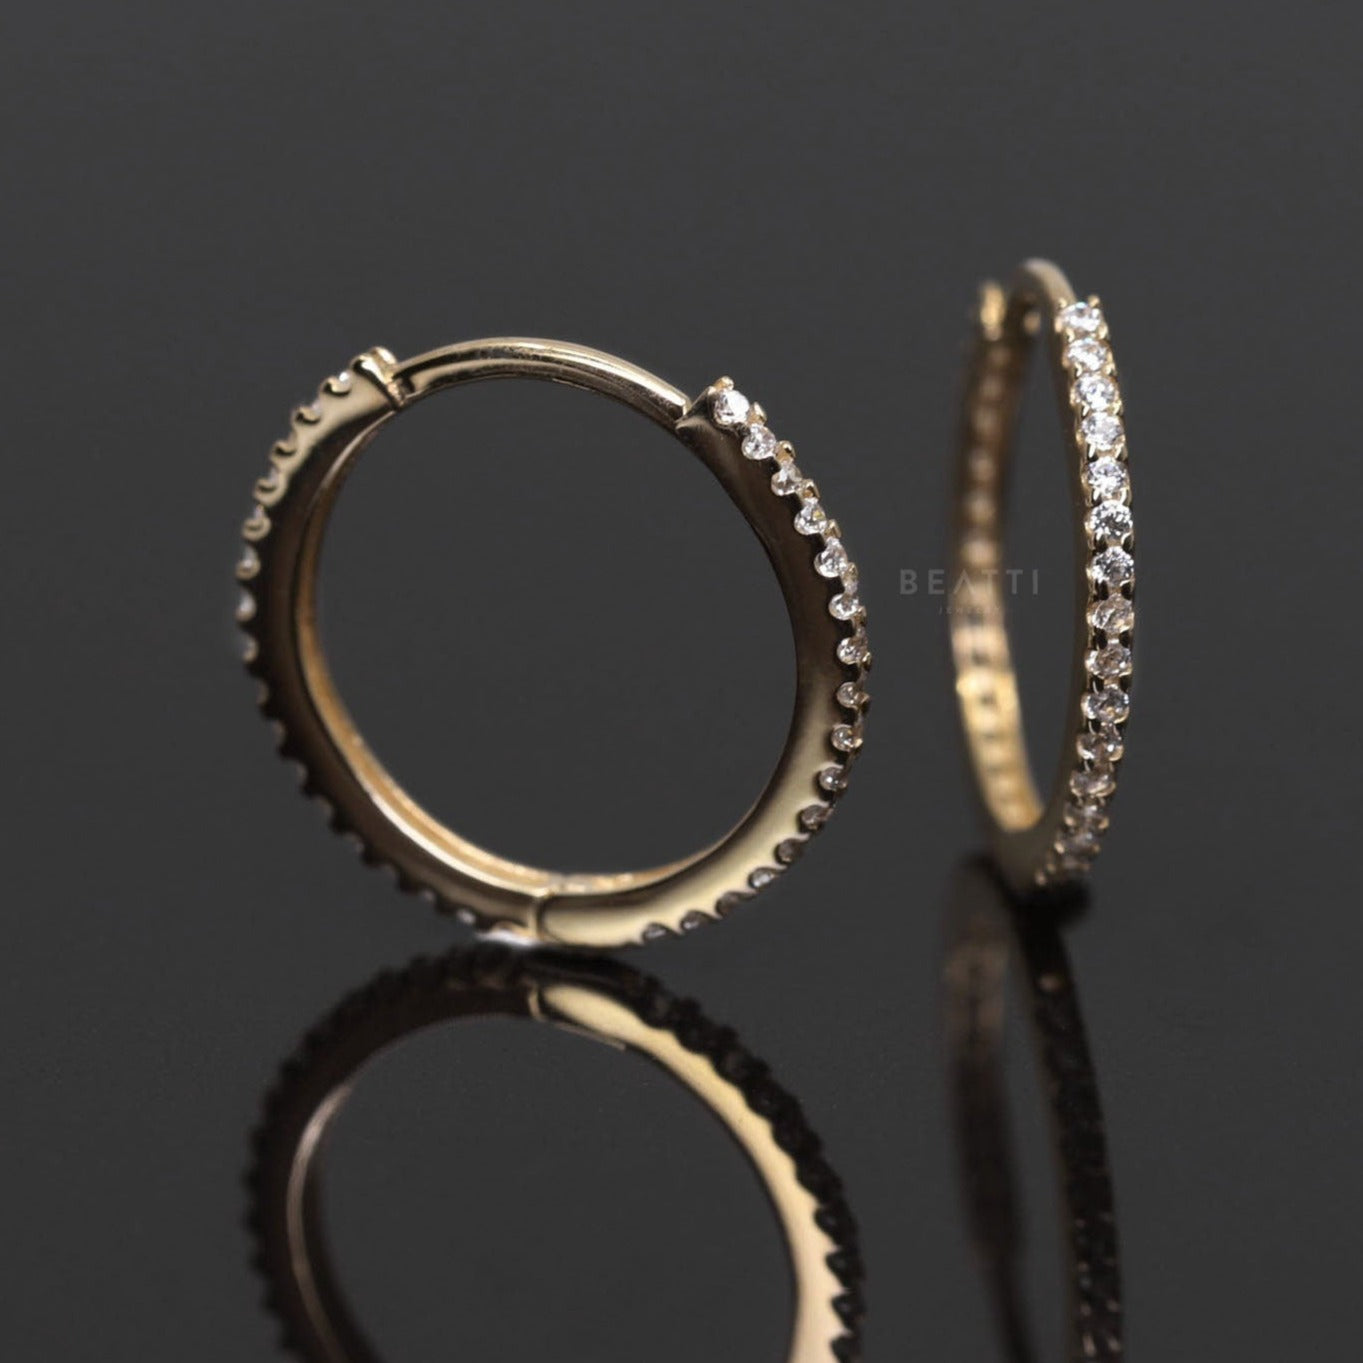 NEW  Delicate 14k Solid Gold CZ Pave Hoop   Slender Conch Hoop    14k Gold Cartilage Earring     14k Conch Hoop, Gold Hoop - BEATTI